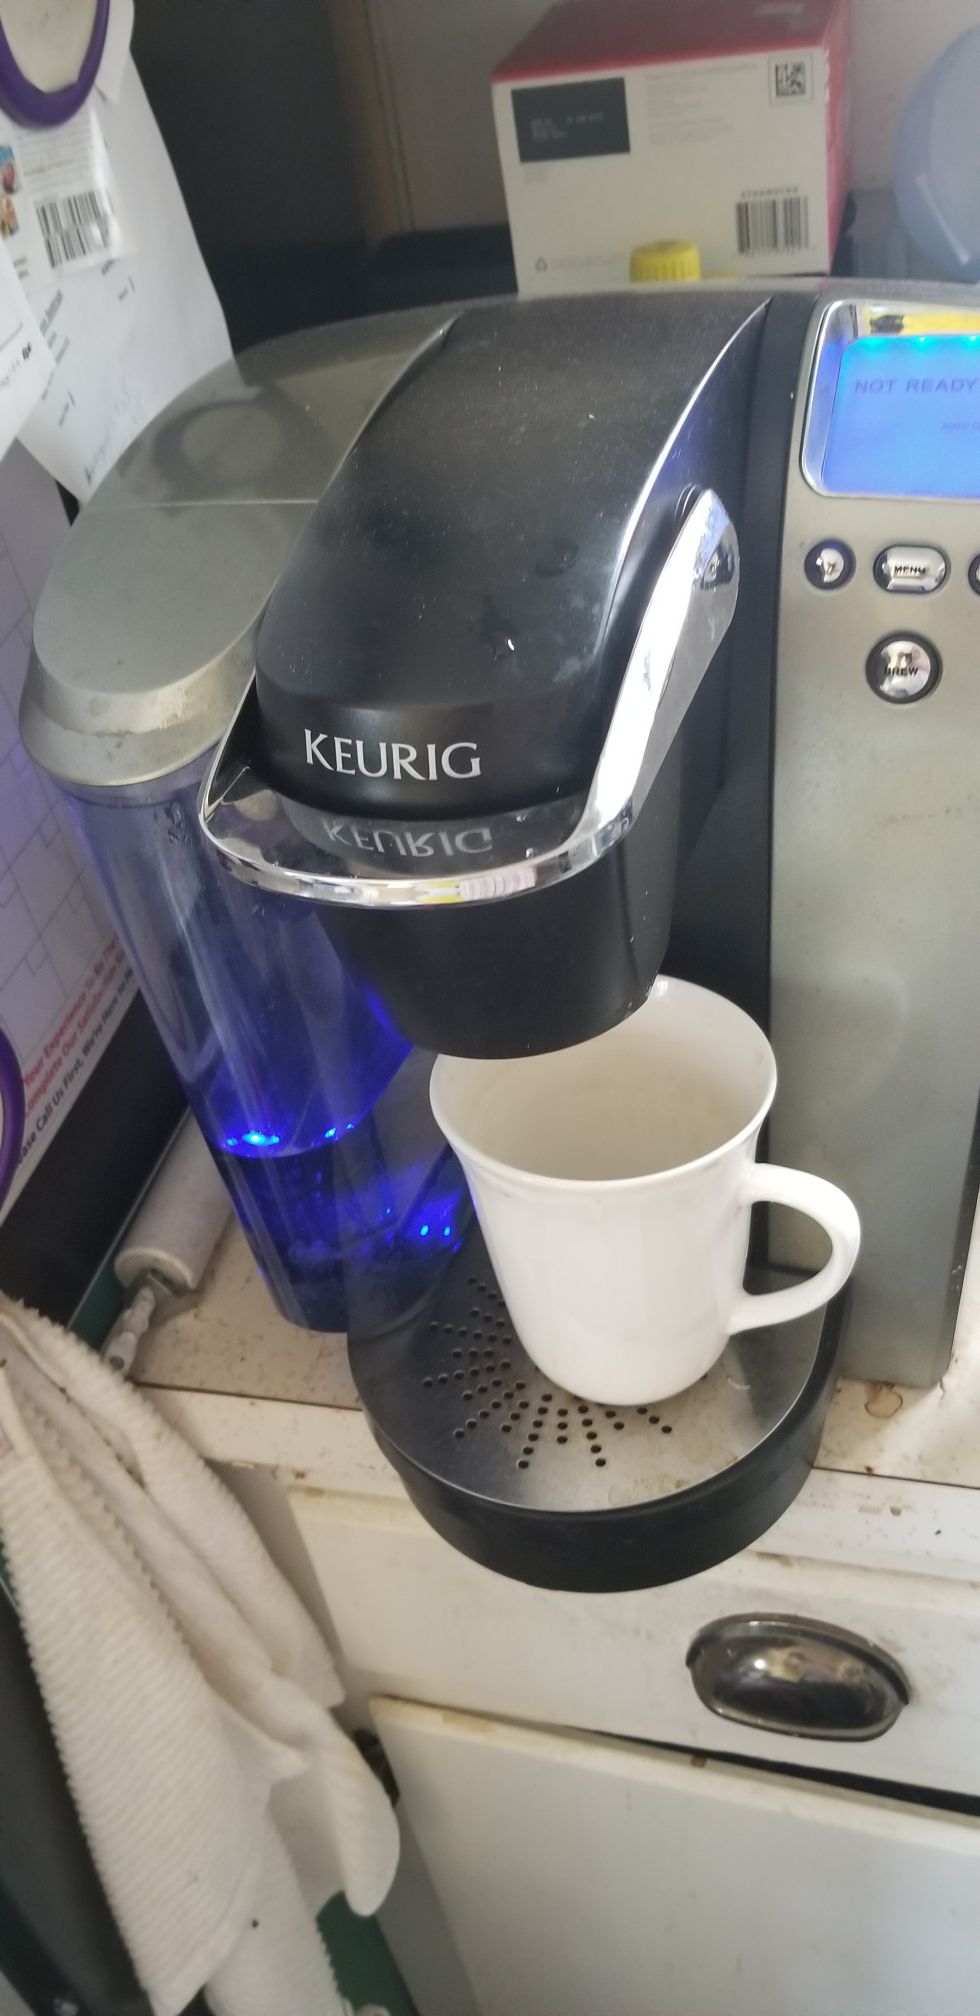 KEURIG DIGITAL COFFEE MAKER EXCELLENT CONDITION